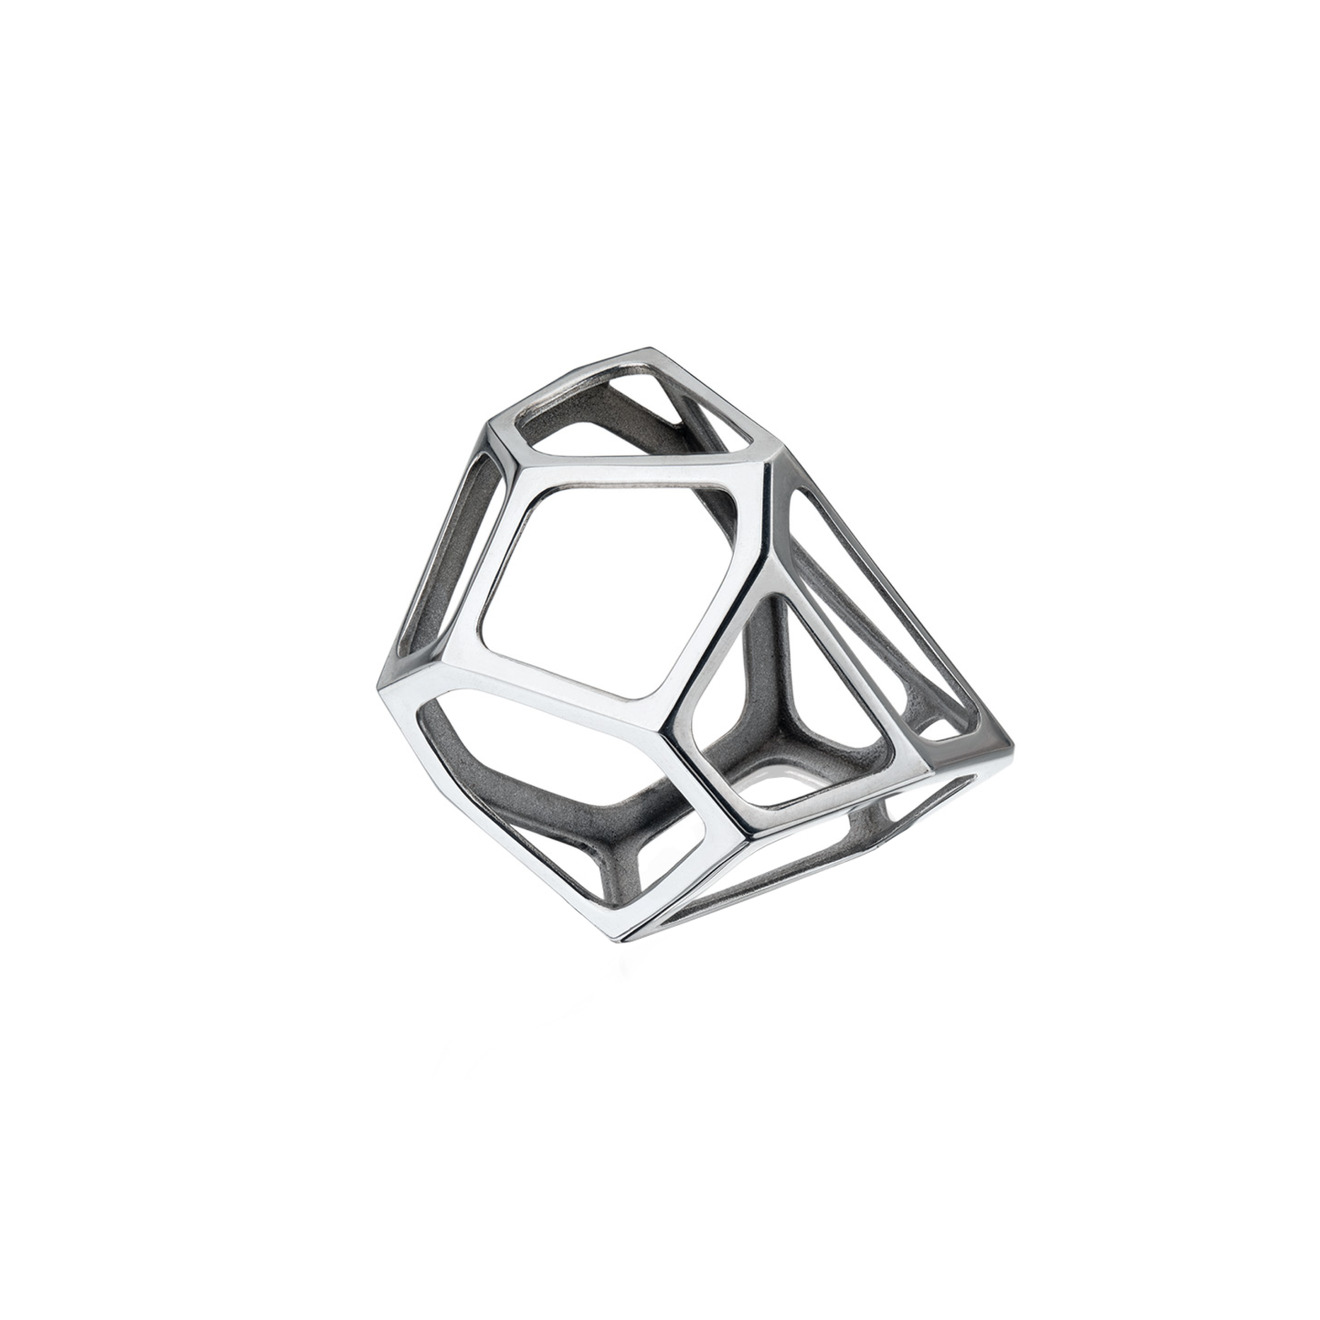 Vertigo Jewellery Lab Безразмерное кольцо CELL MONO из серебра кольцо freeform jewellery безразмерное серебряный